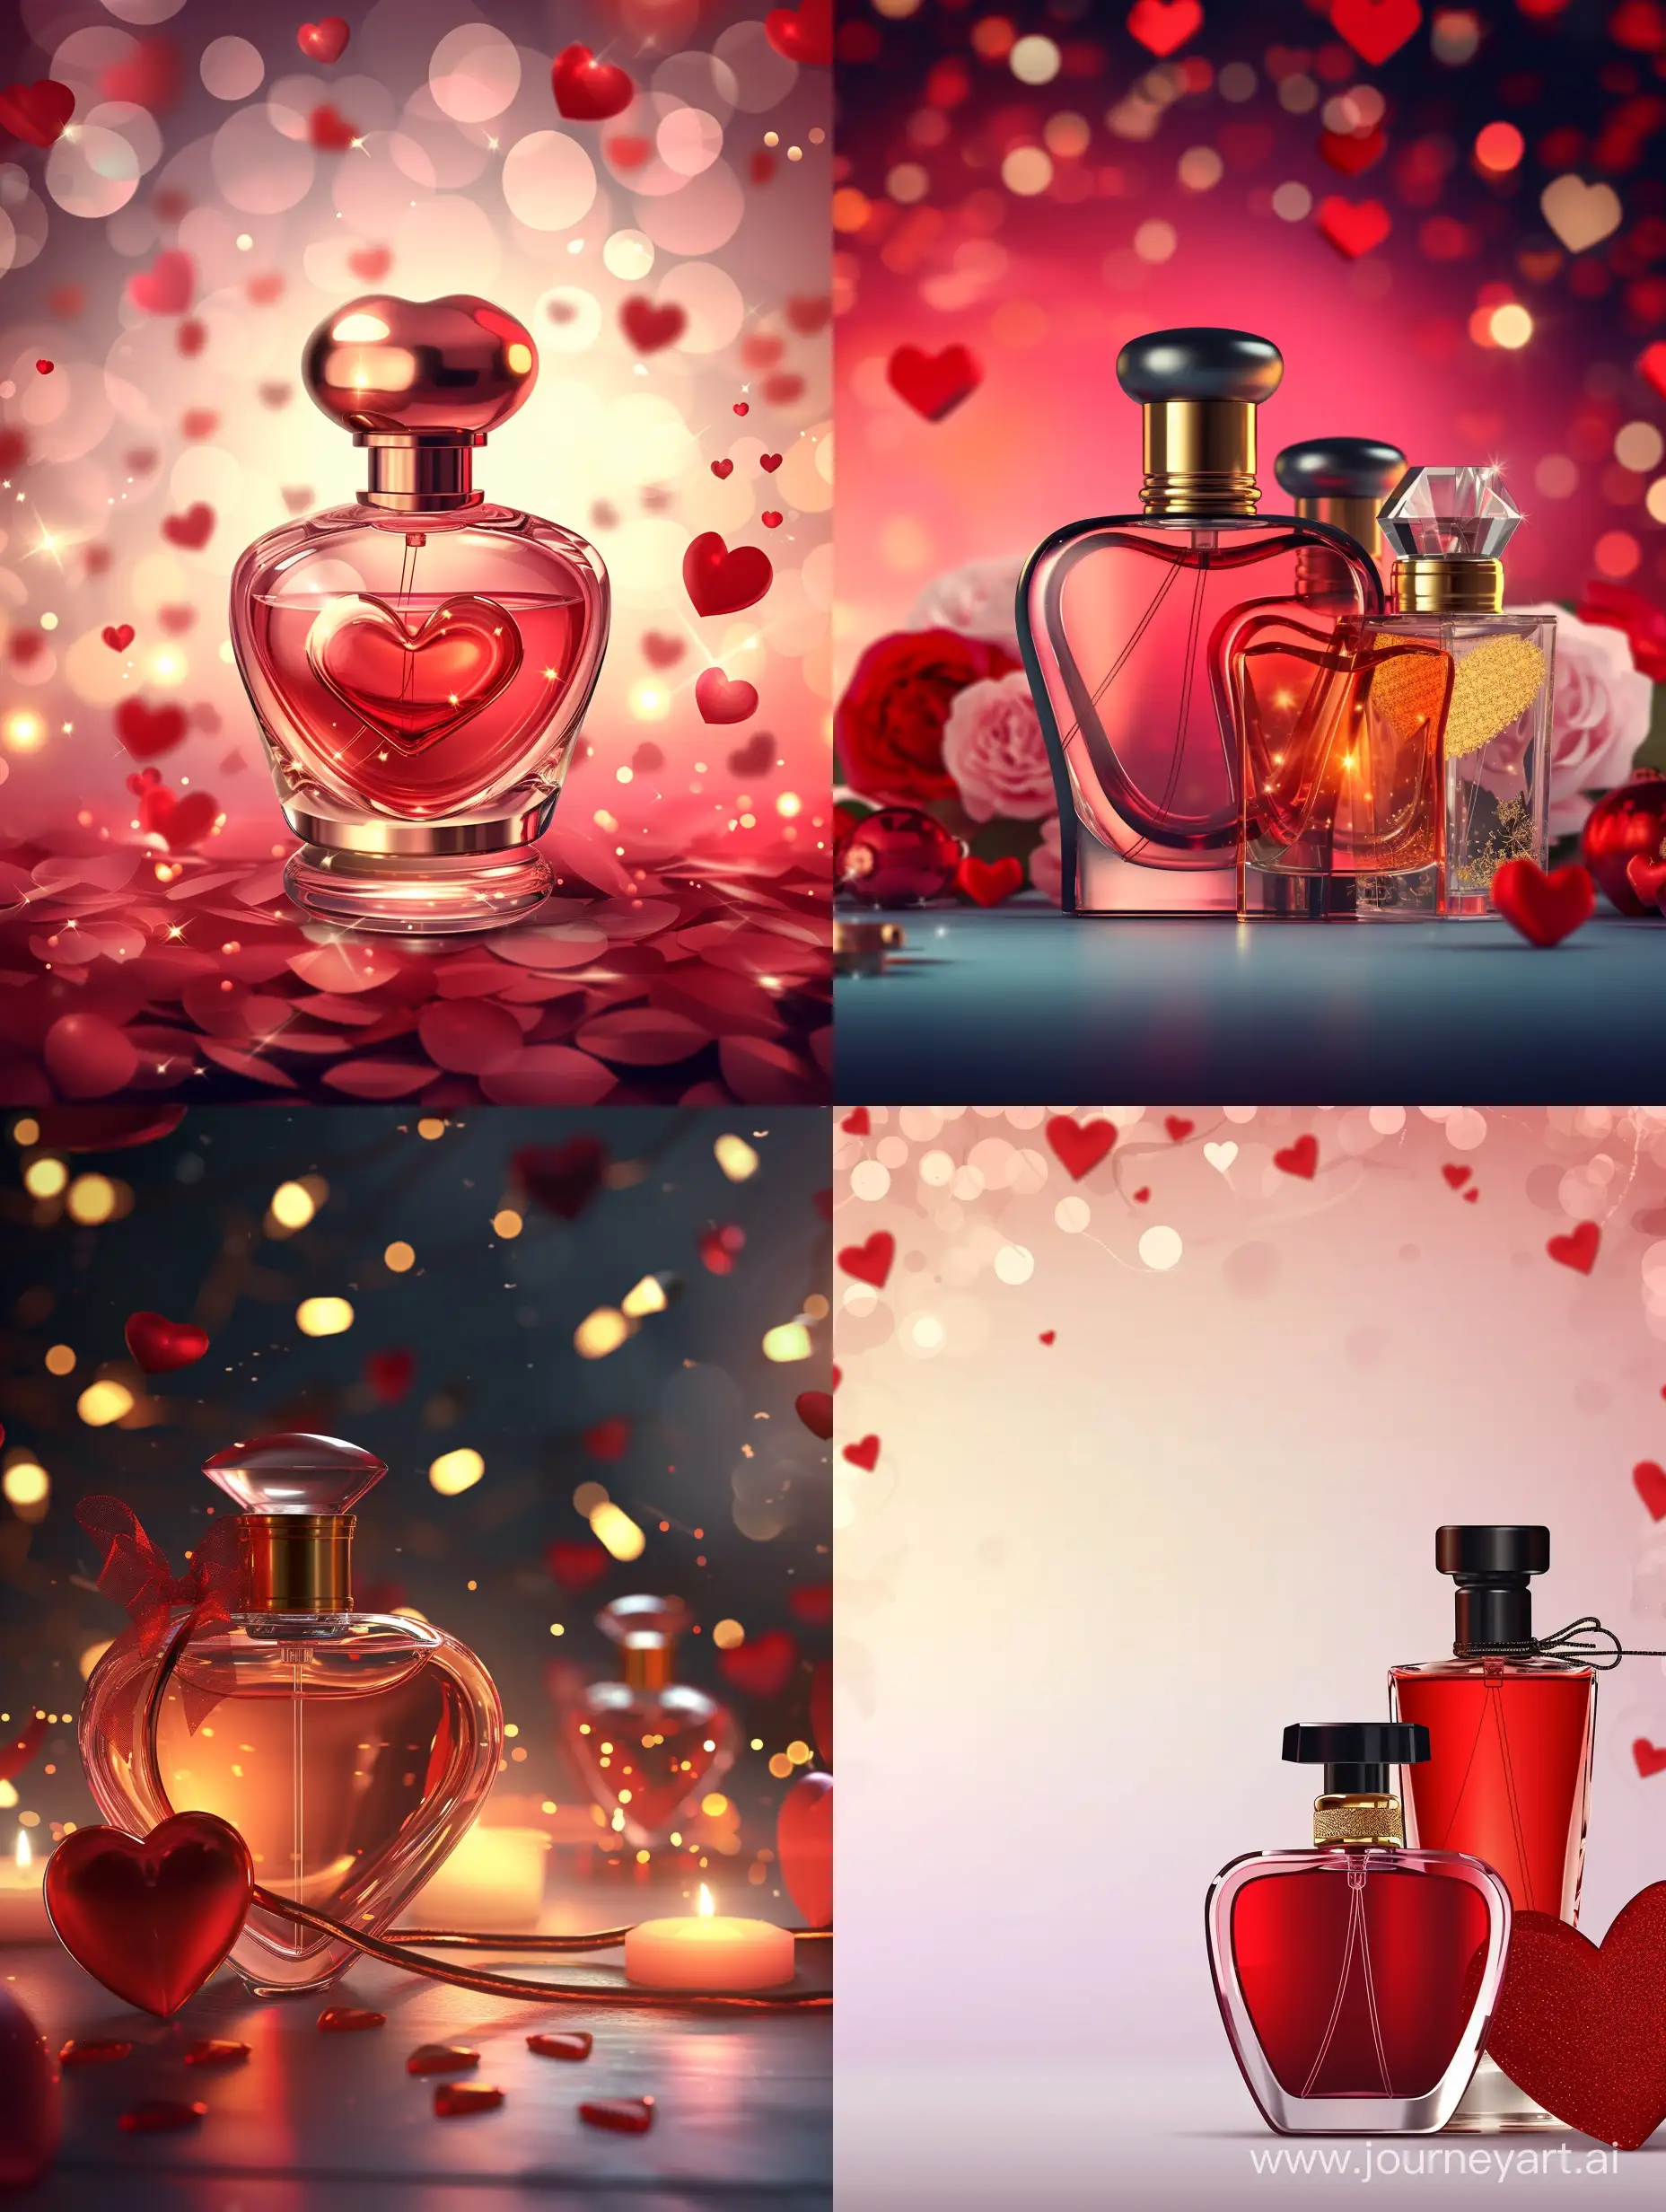 Elegant-Valentines-Day-Perfume-Bottles-in-Realistic-Festive-Atmosphere